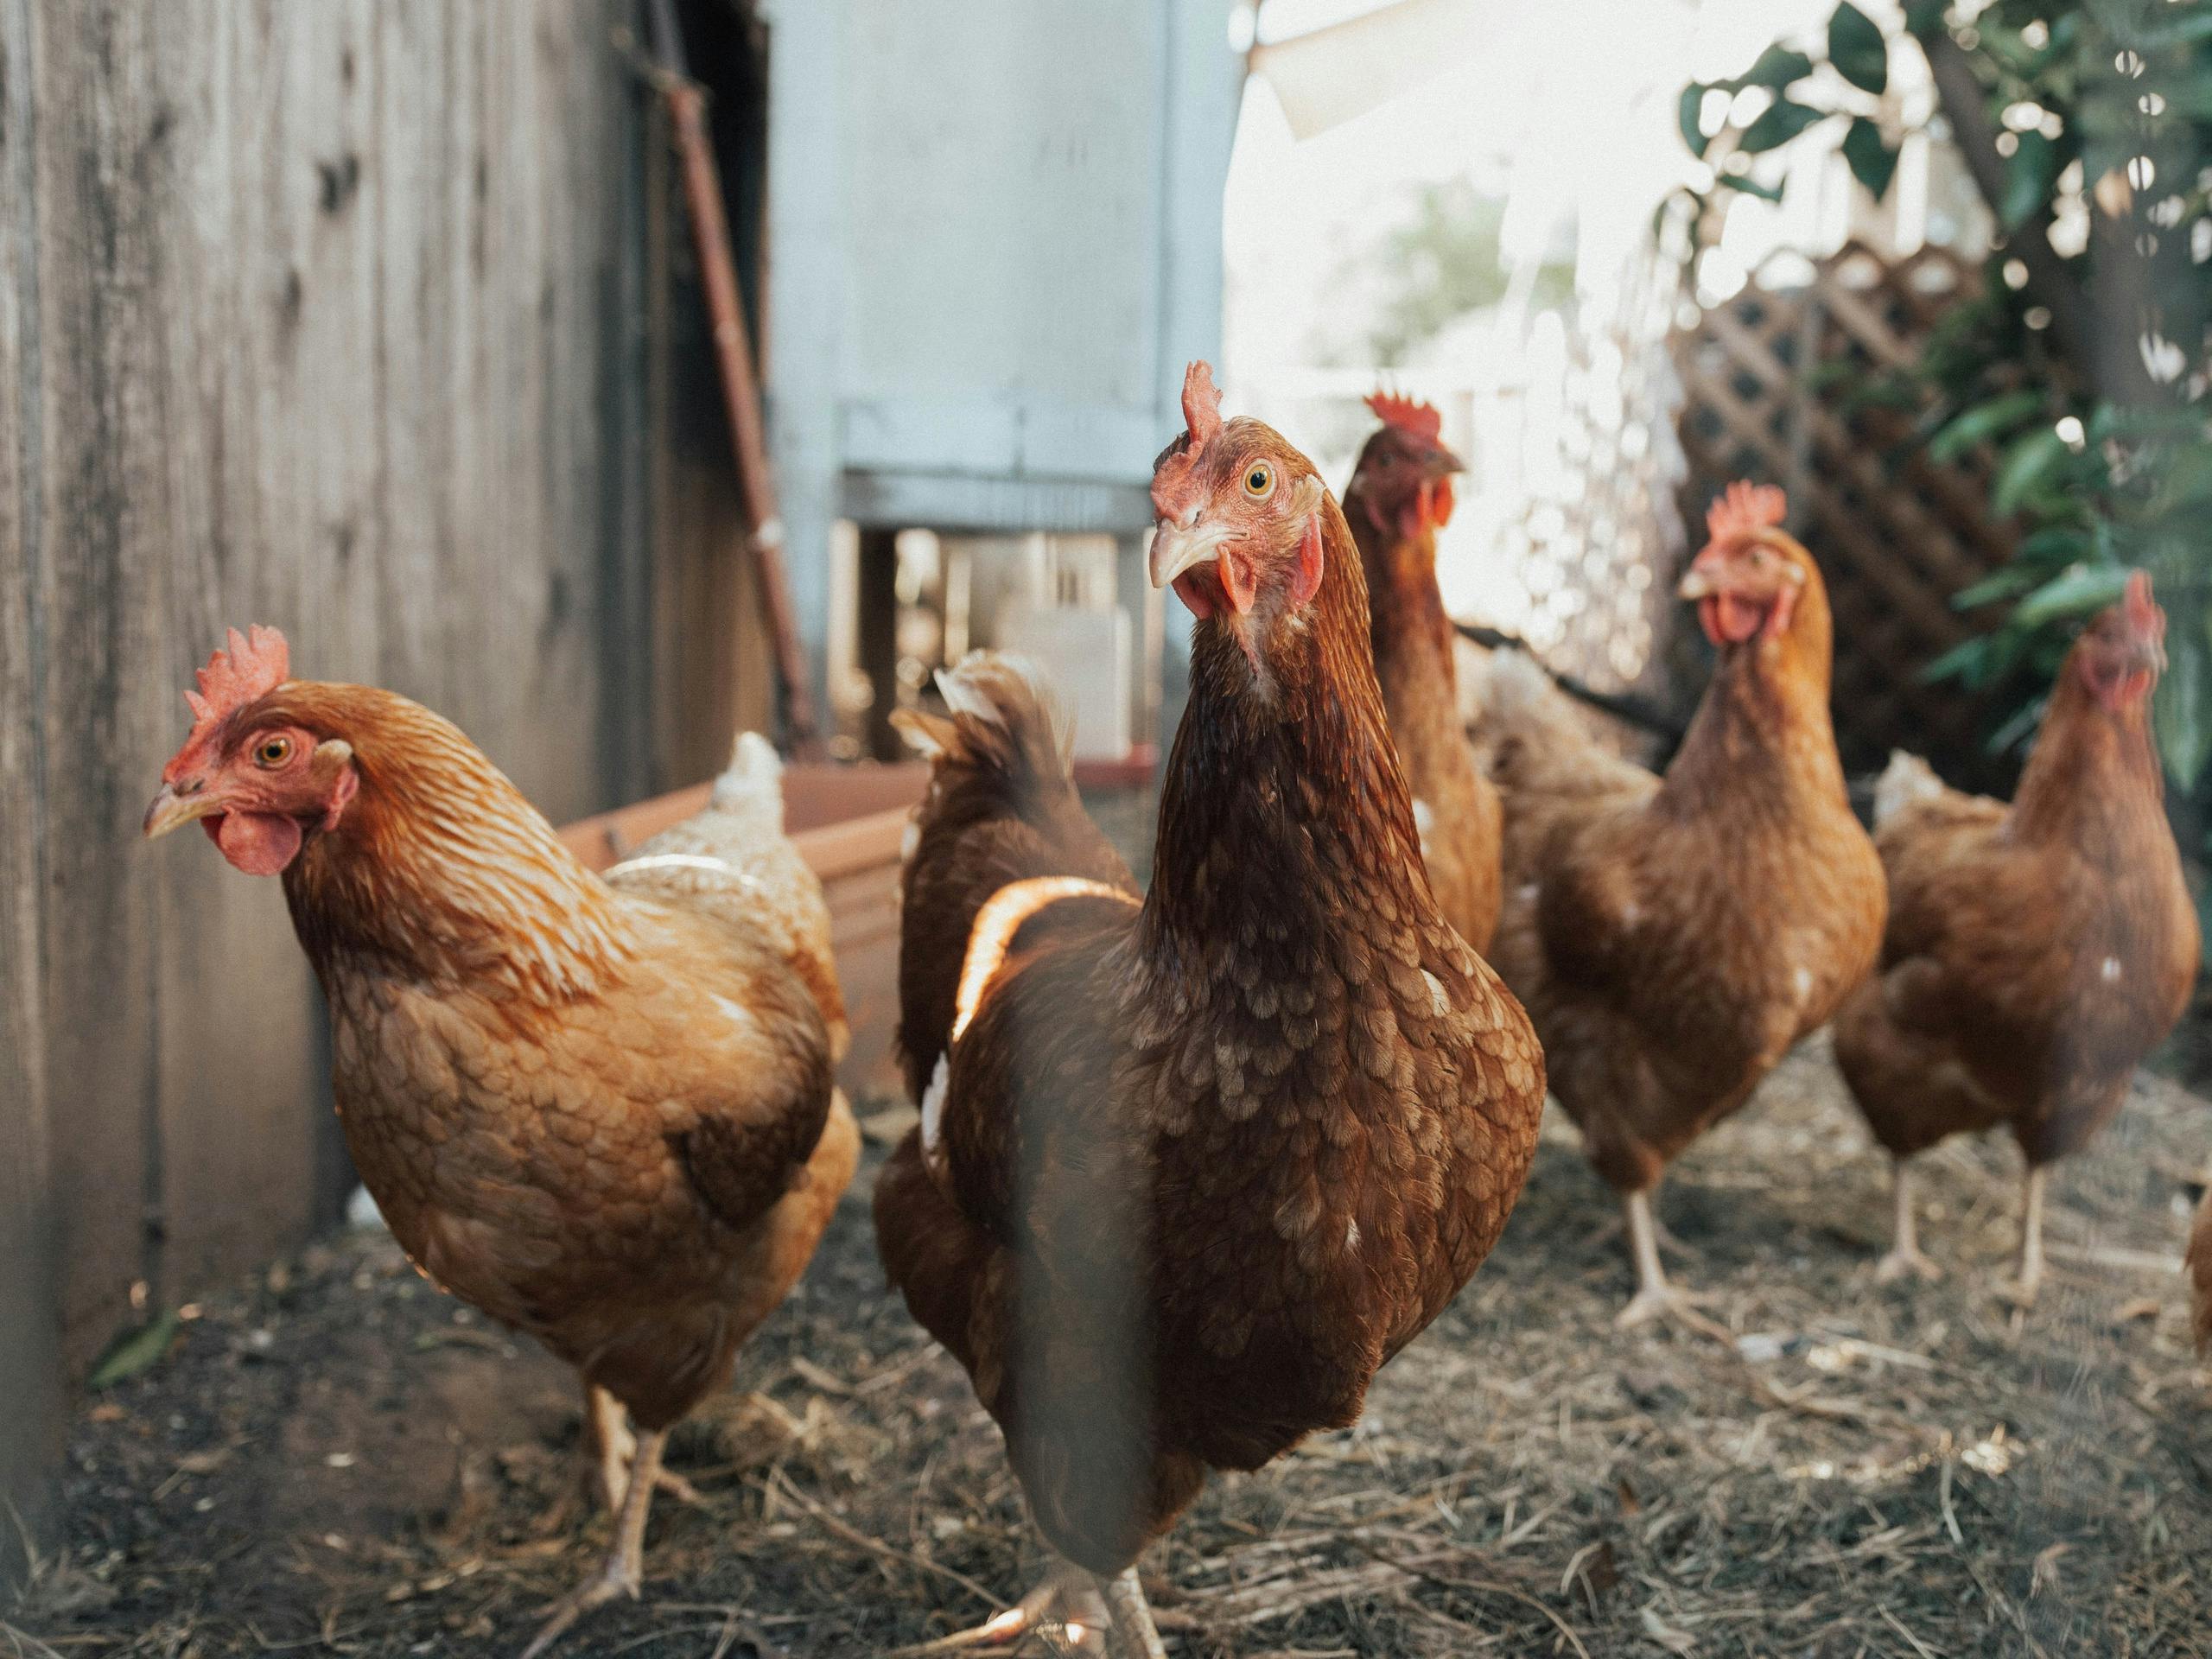 Preoccupazioni per l’epidemia di influenza aviaria “straordinaria”.